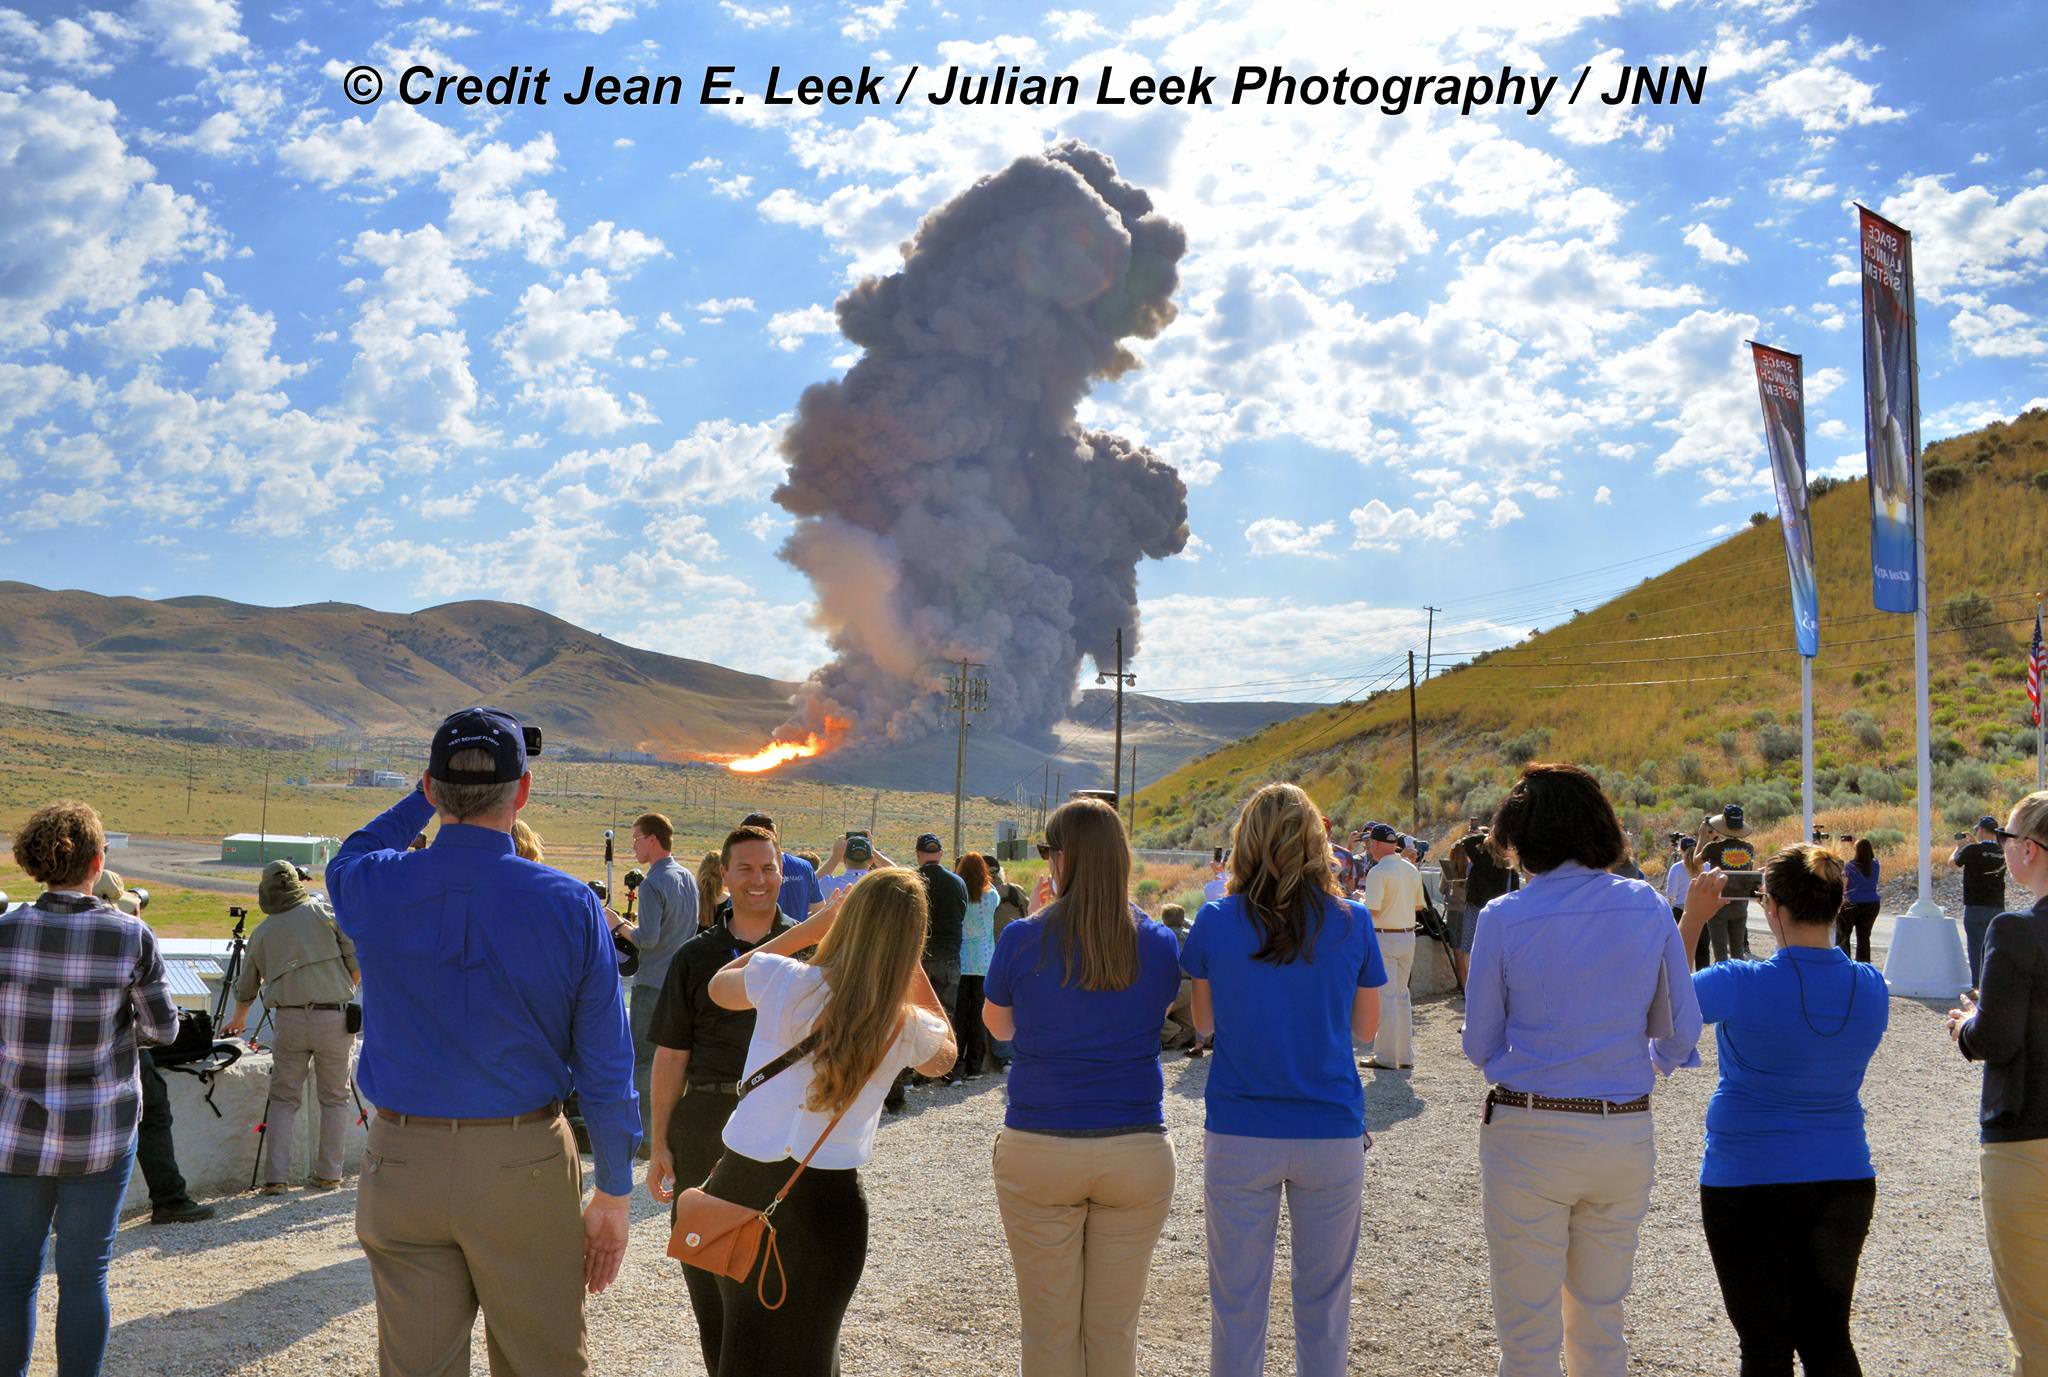 Thrilled spectators witness the Qualification Motor-2 (QM-2) test firing on June 28, 2016 at Orbital ATK test facilities in Promontory, Utah.  Credit: Jean Leek